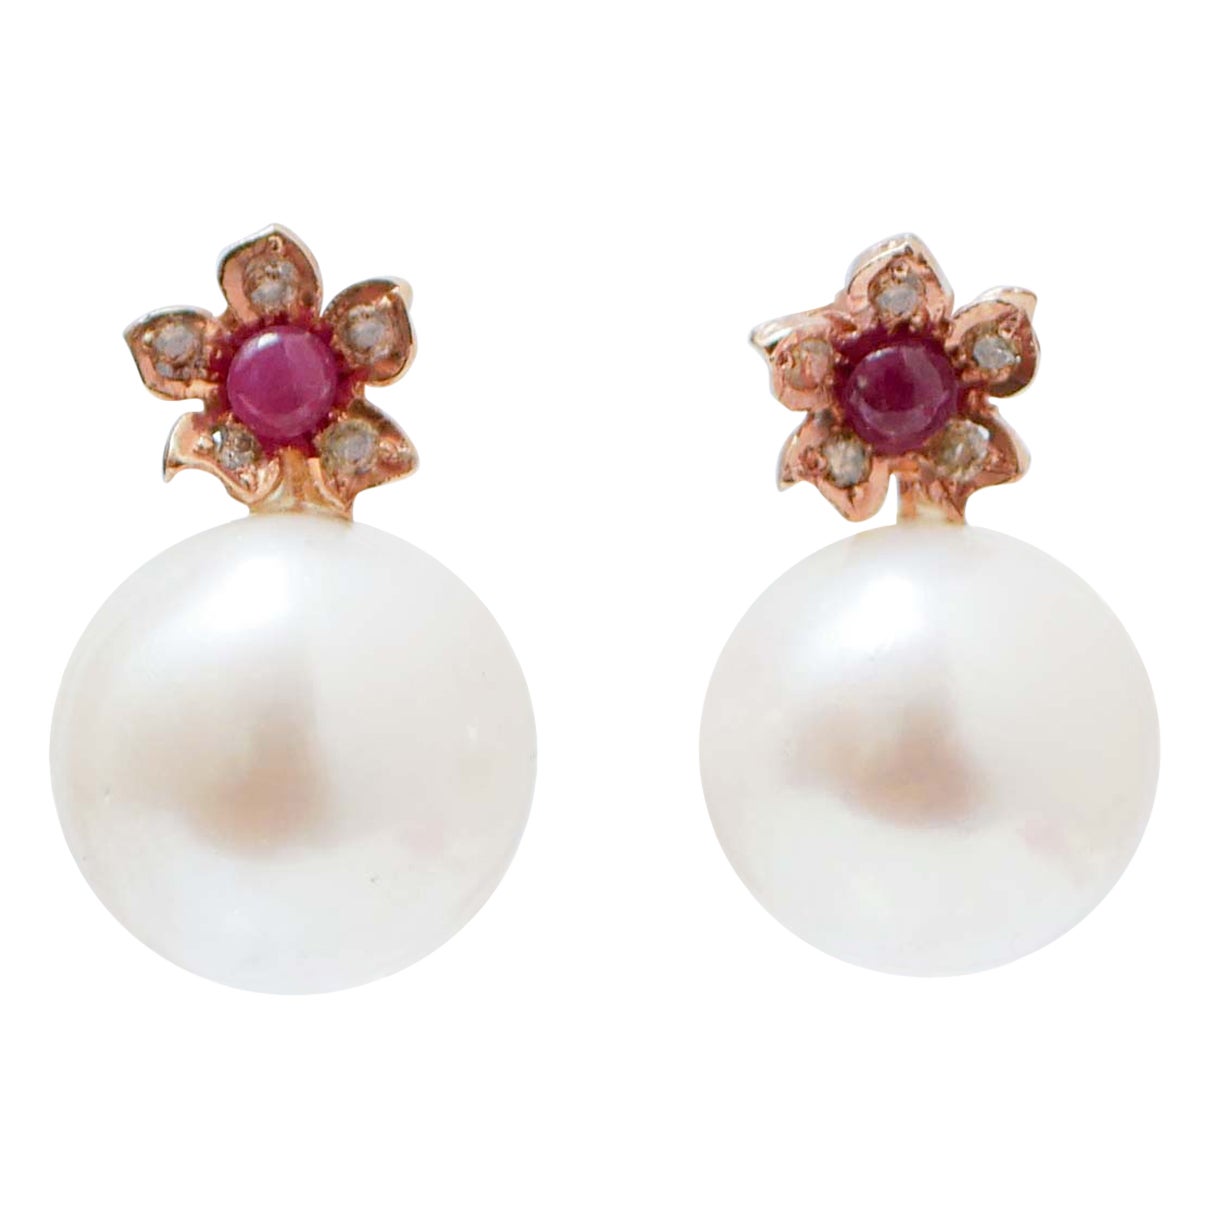 White Pearls, Rubies, Diamonds, Rose Gold Earrings.